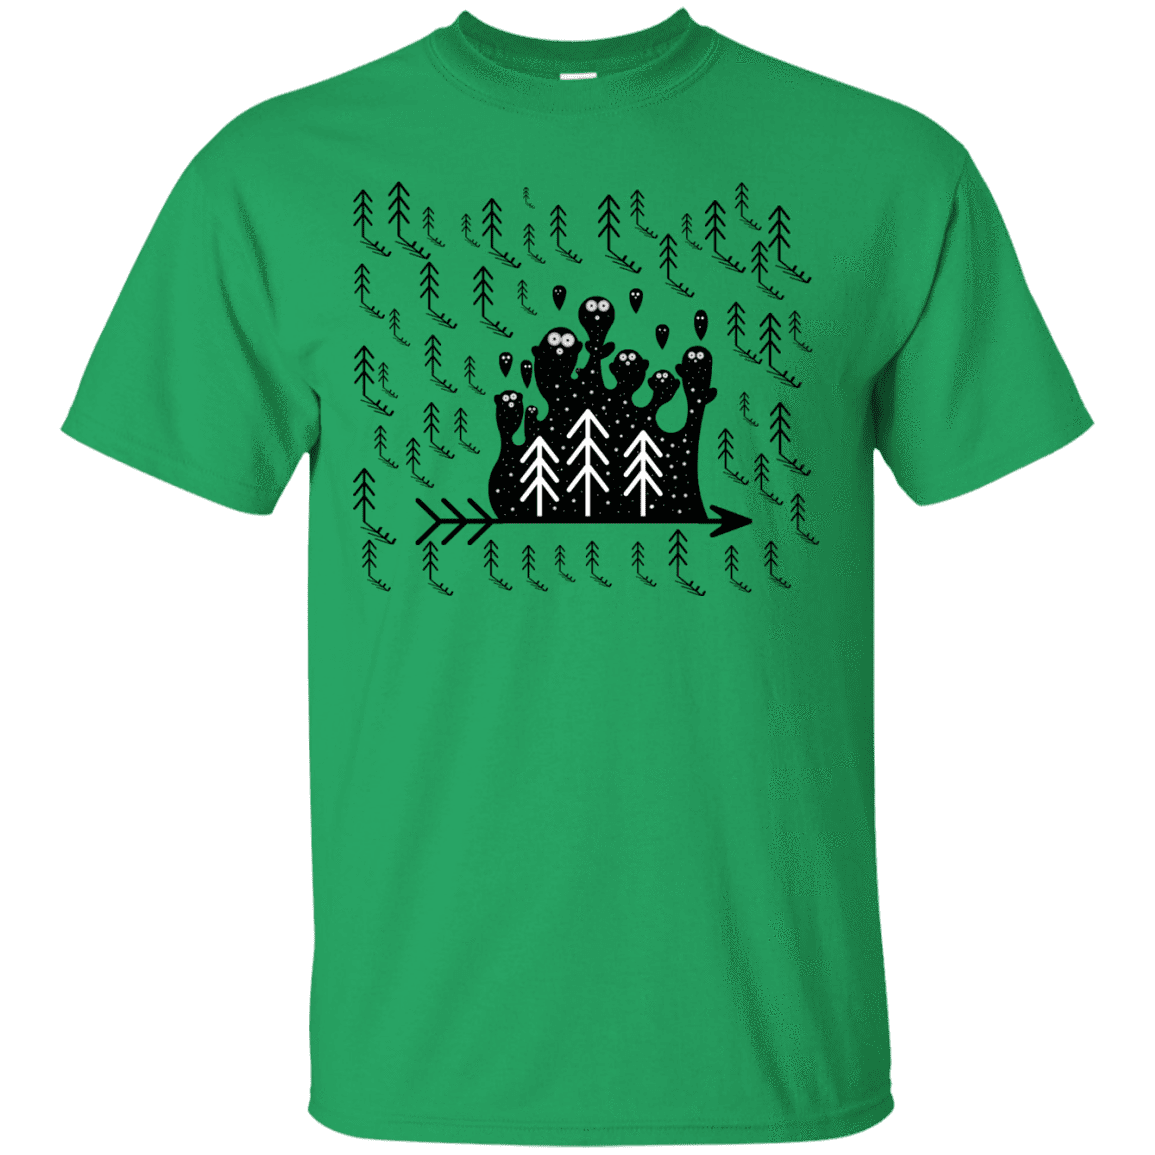 T-Shirts Irish Green / S Campfire Stories T-Shirt